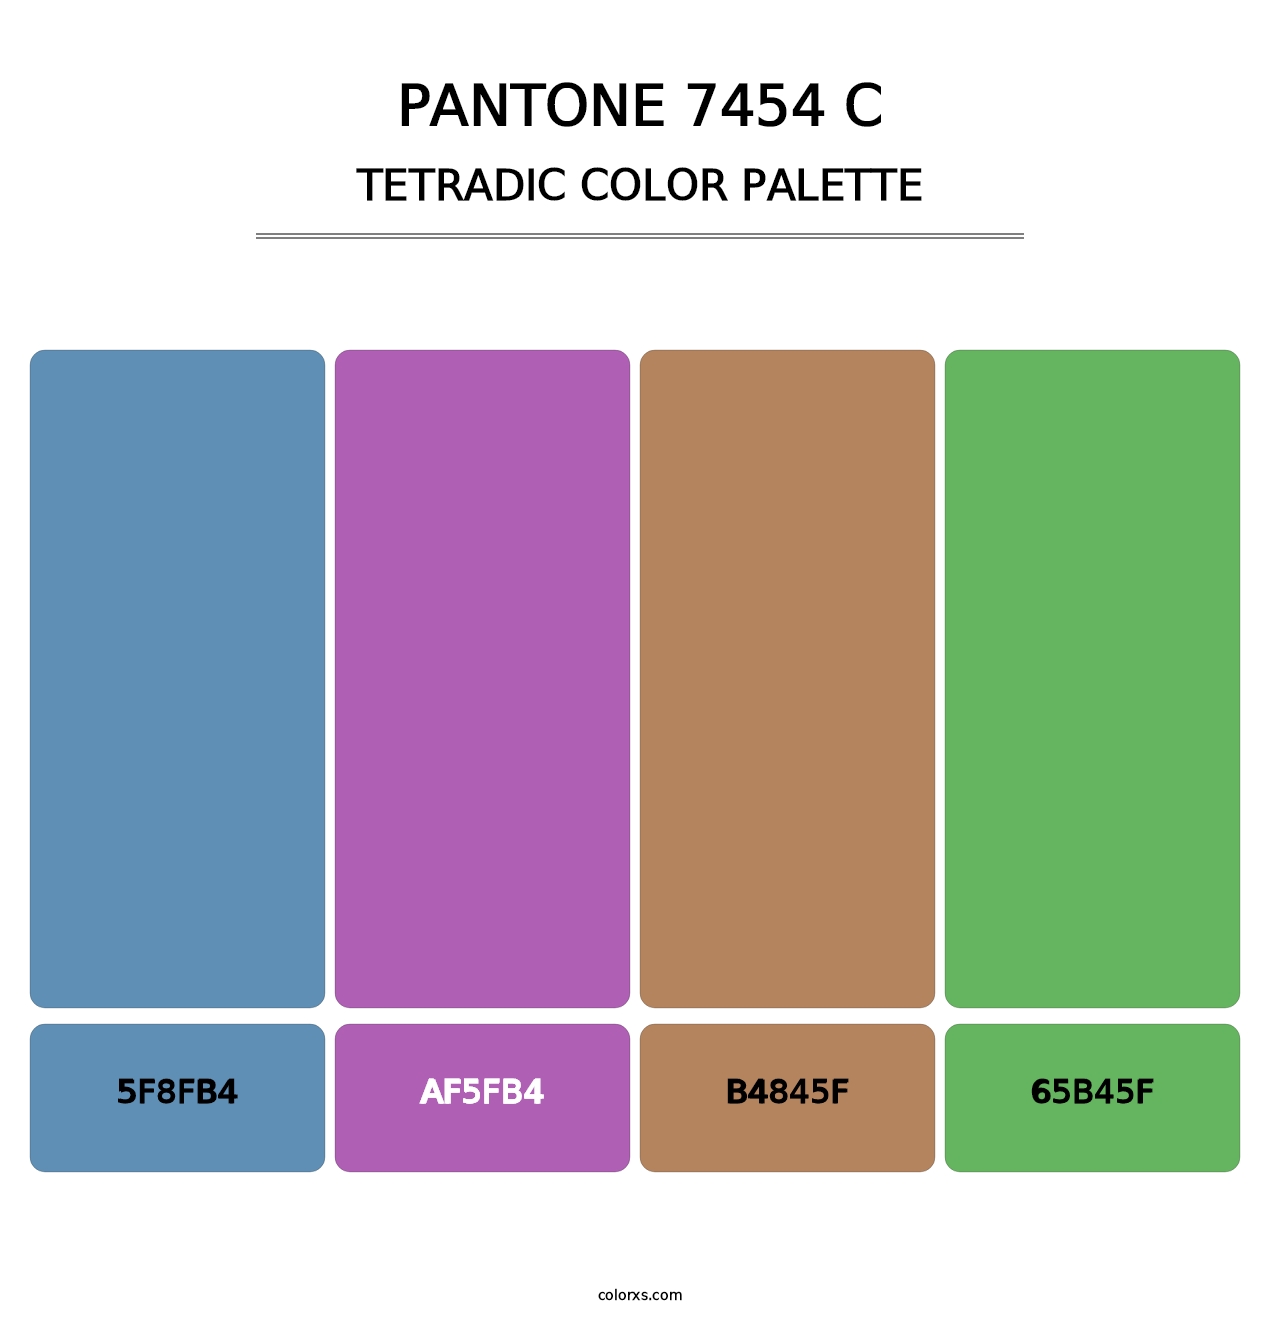 PANTONE 7454 C - Tetradic Color Palette